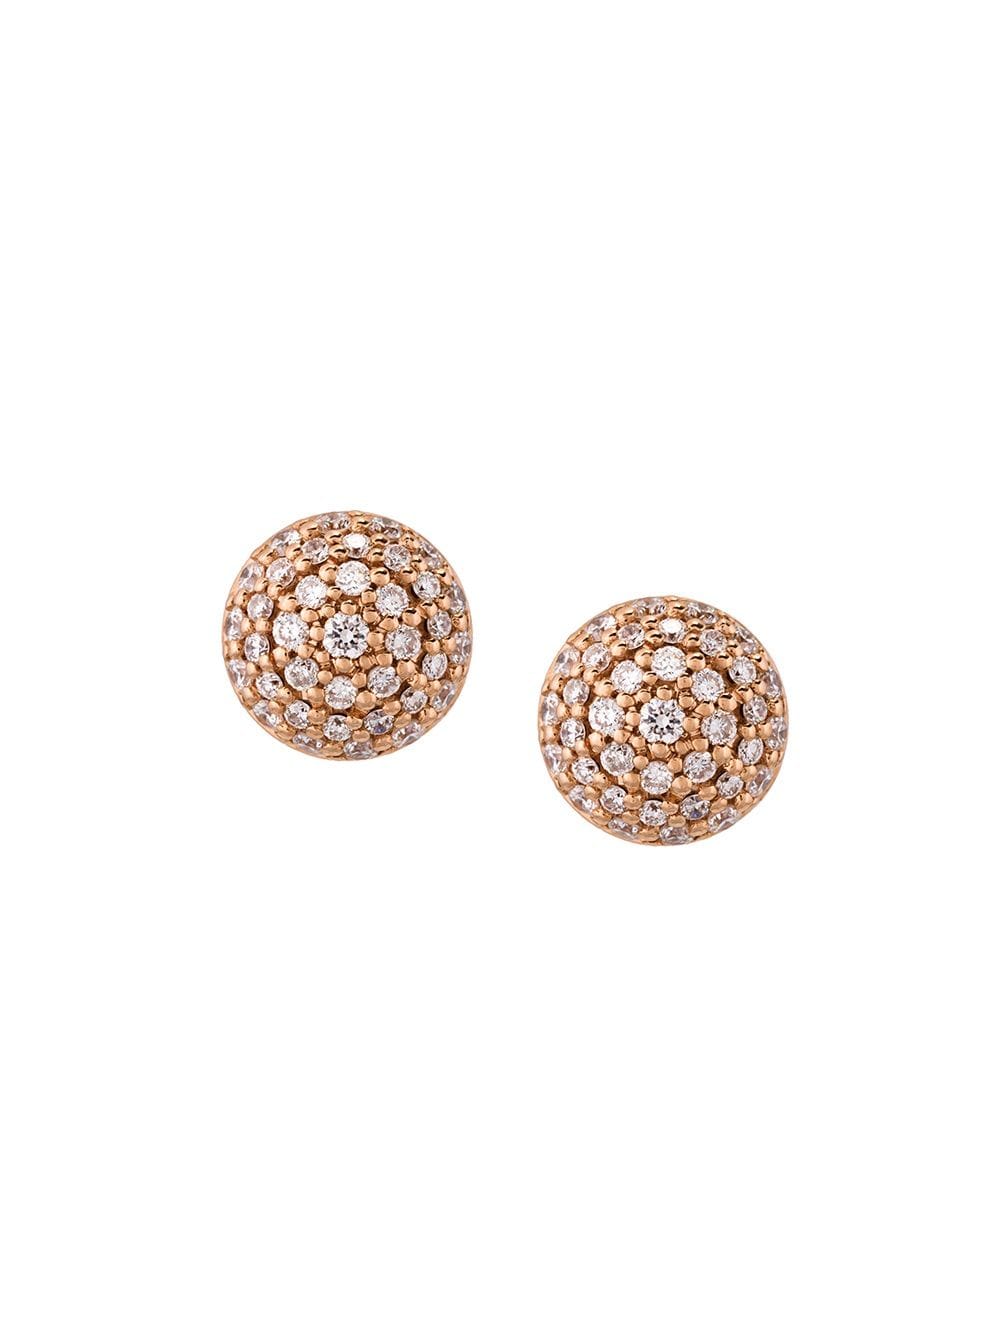 ALINKA 18kt rose gold Black Caviar diamond stud earrings - Metallic von ALINKA